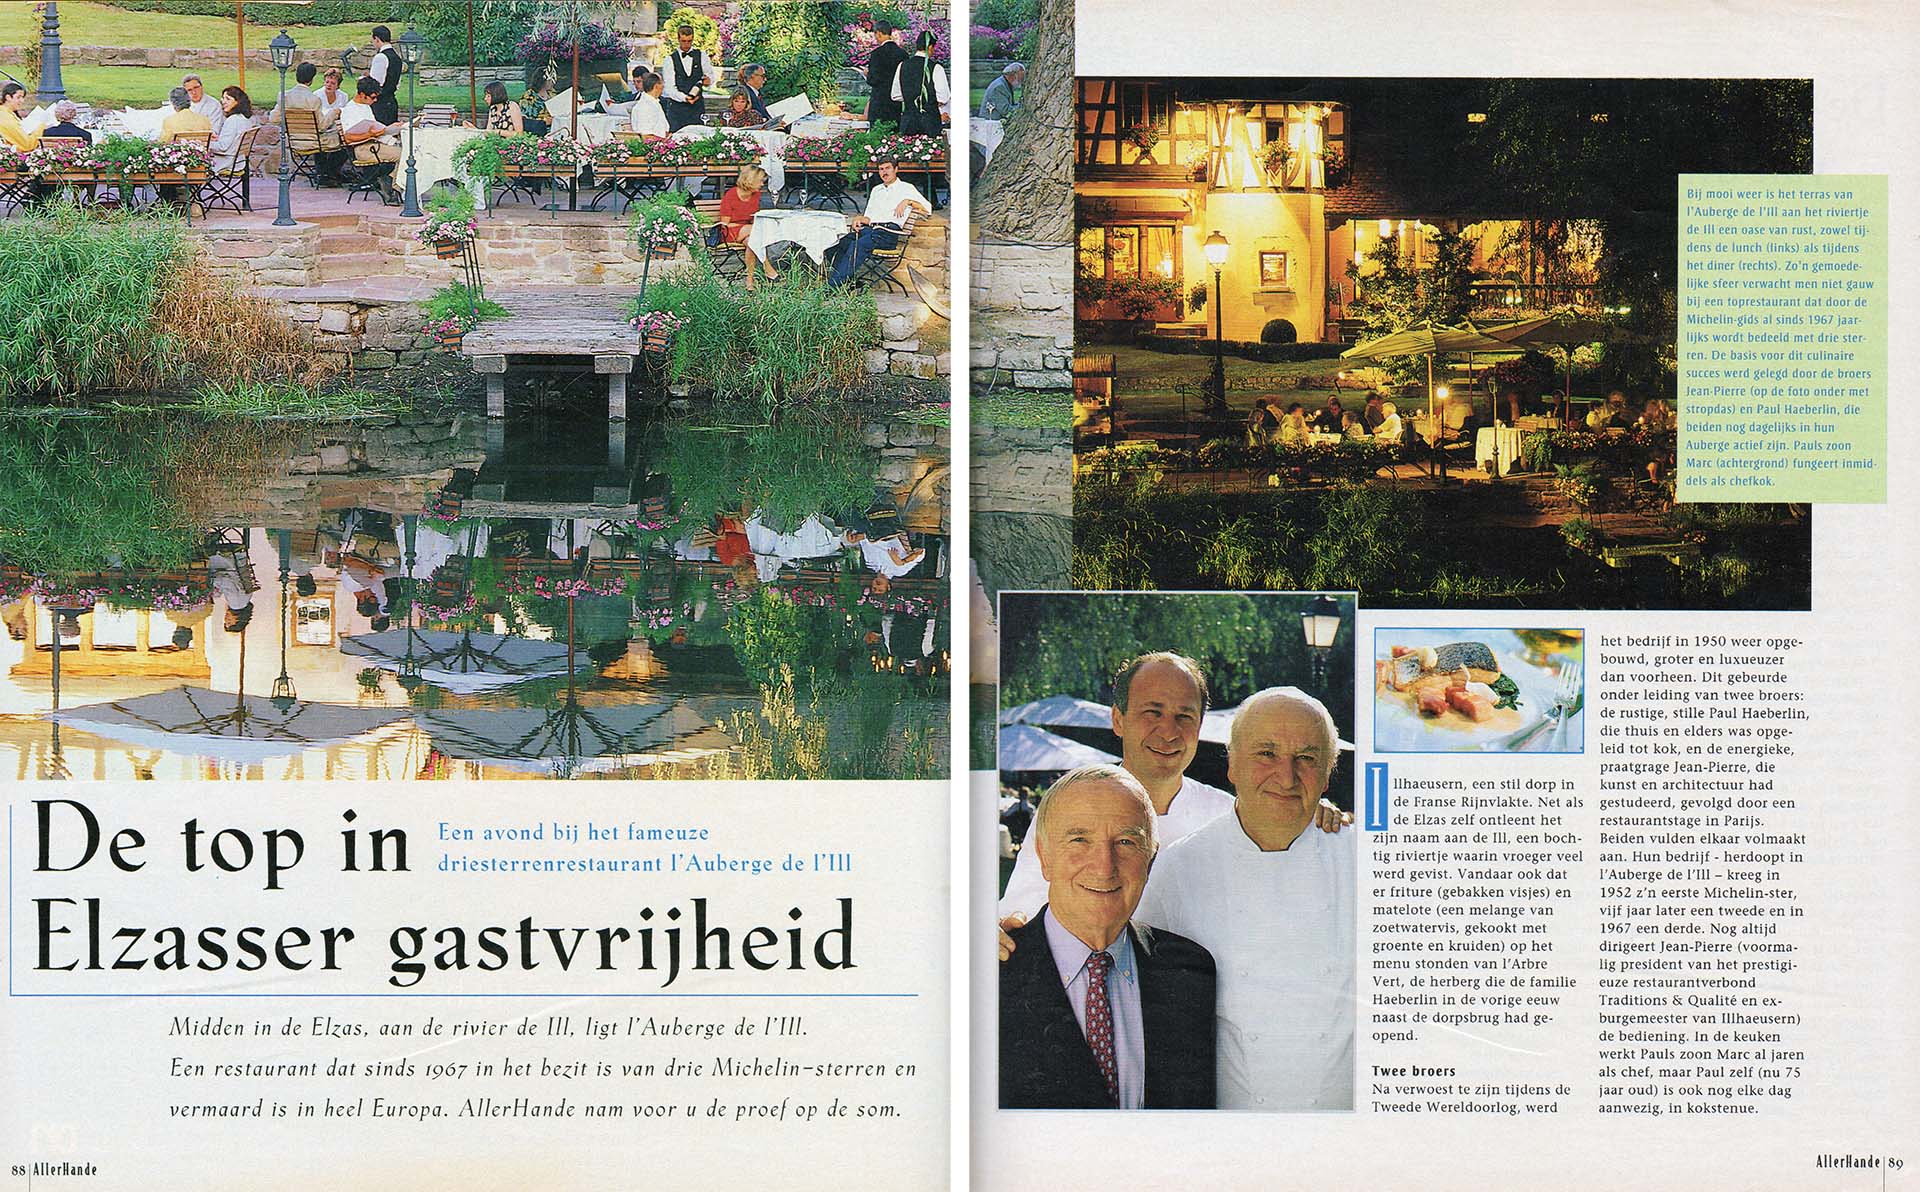 Publication in AllerHande about a three-star restaurant in Alsace.